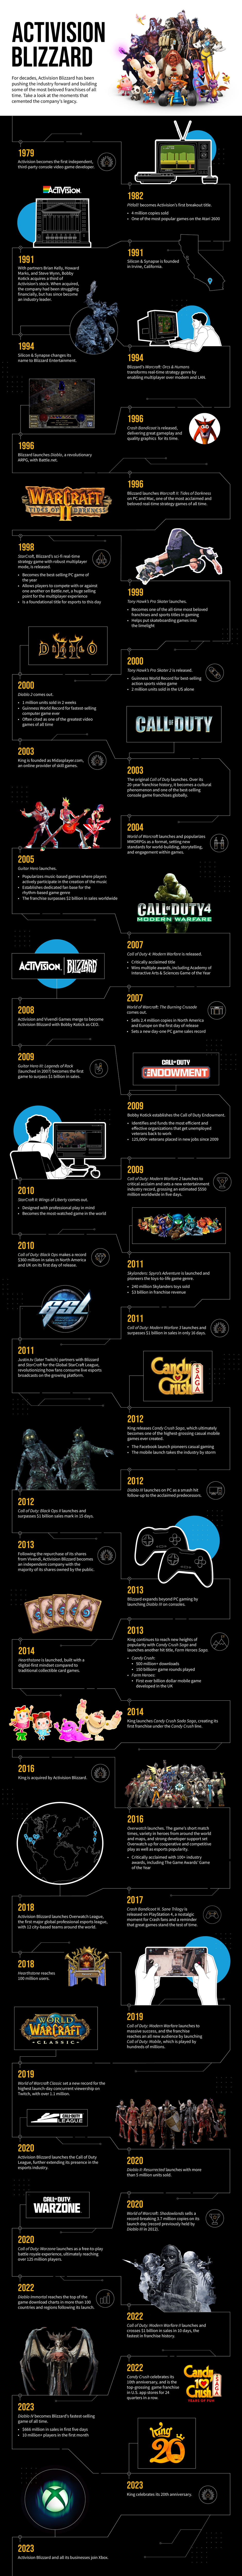 Microsoft Activision Blizzard Infographic.jpg